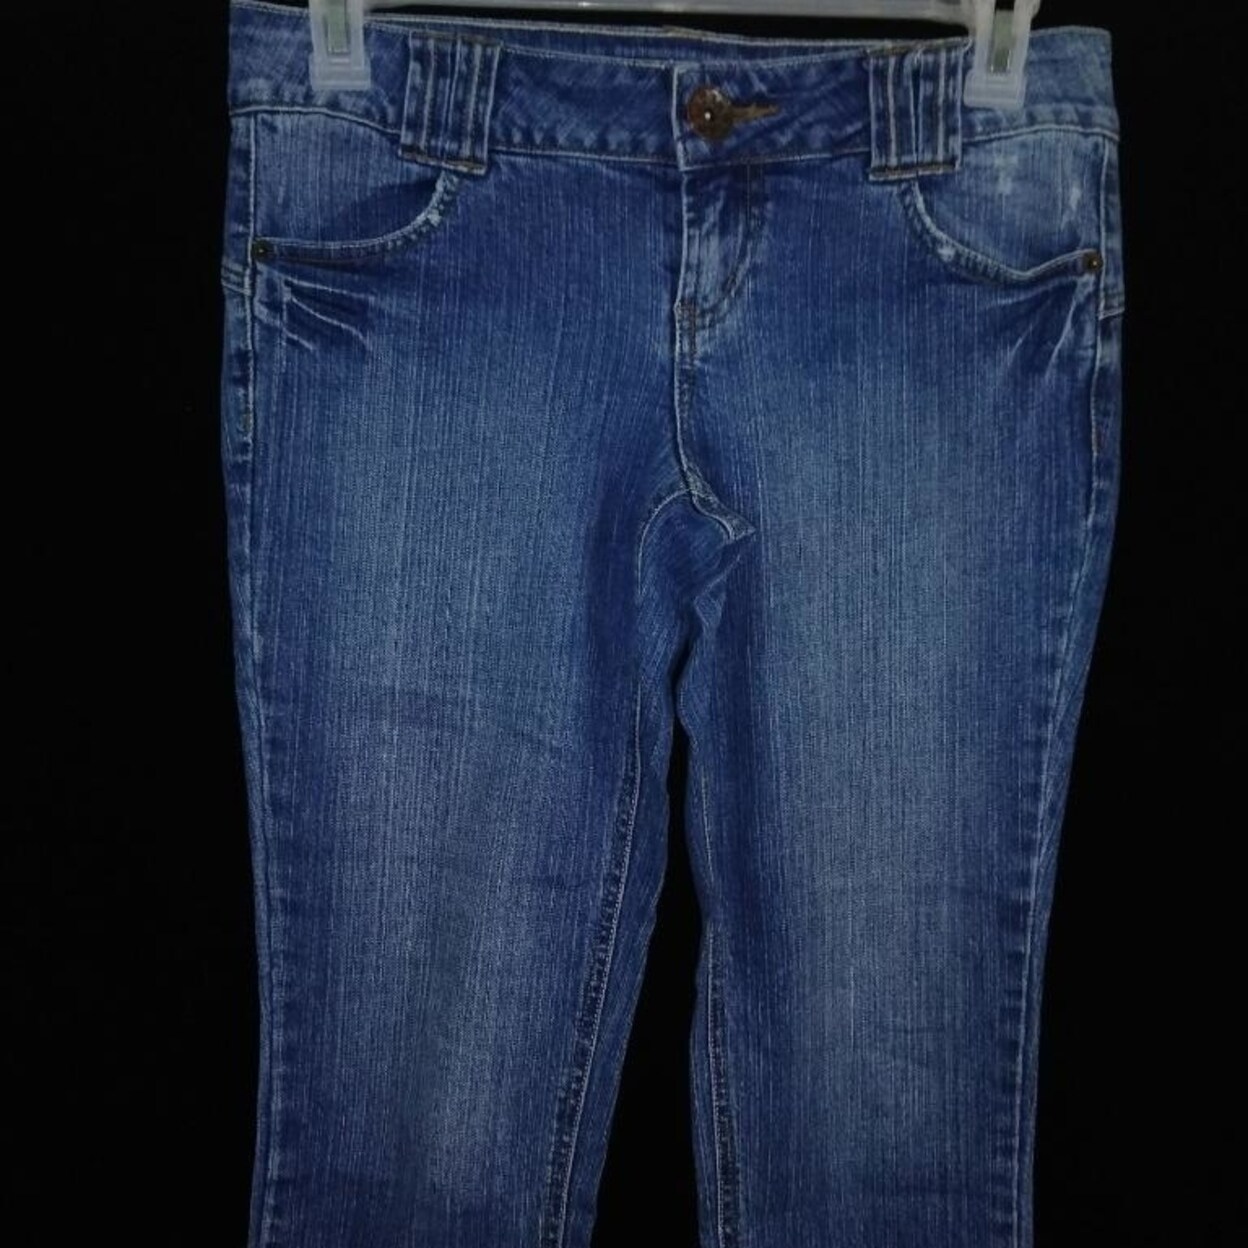 lei ashley low rise jeans